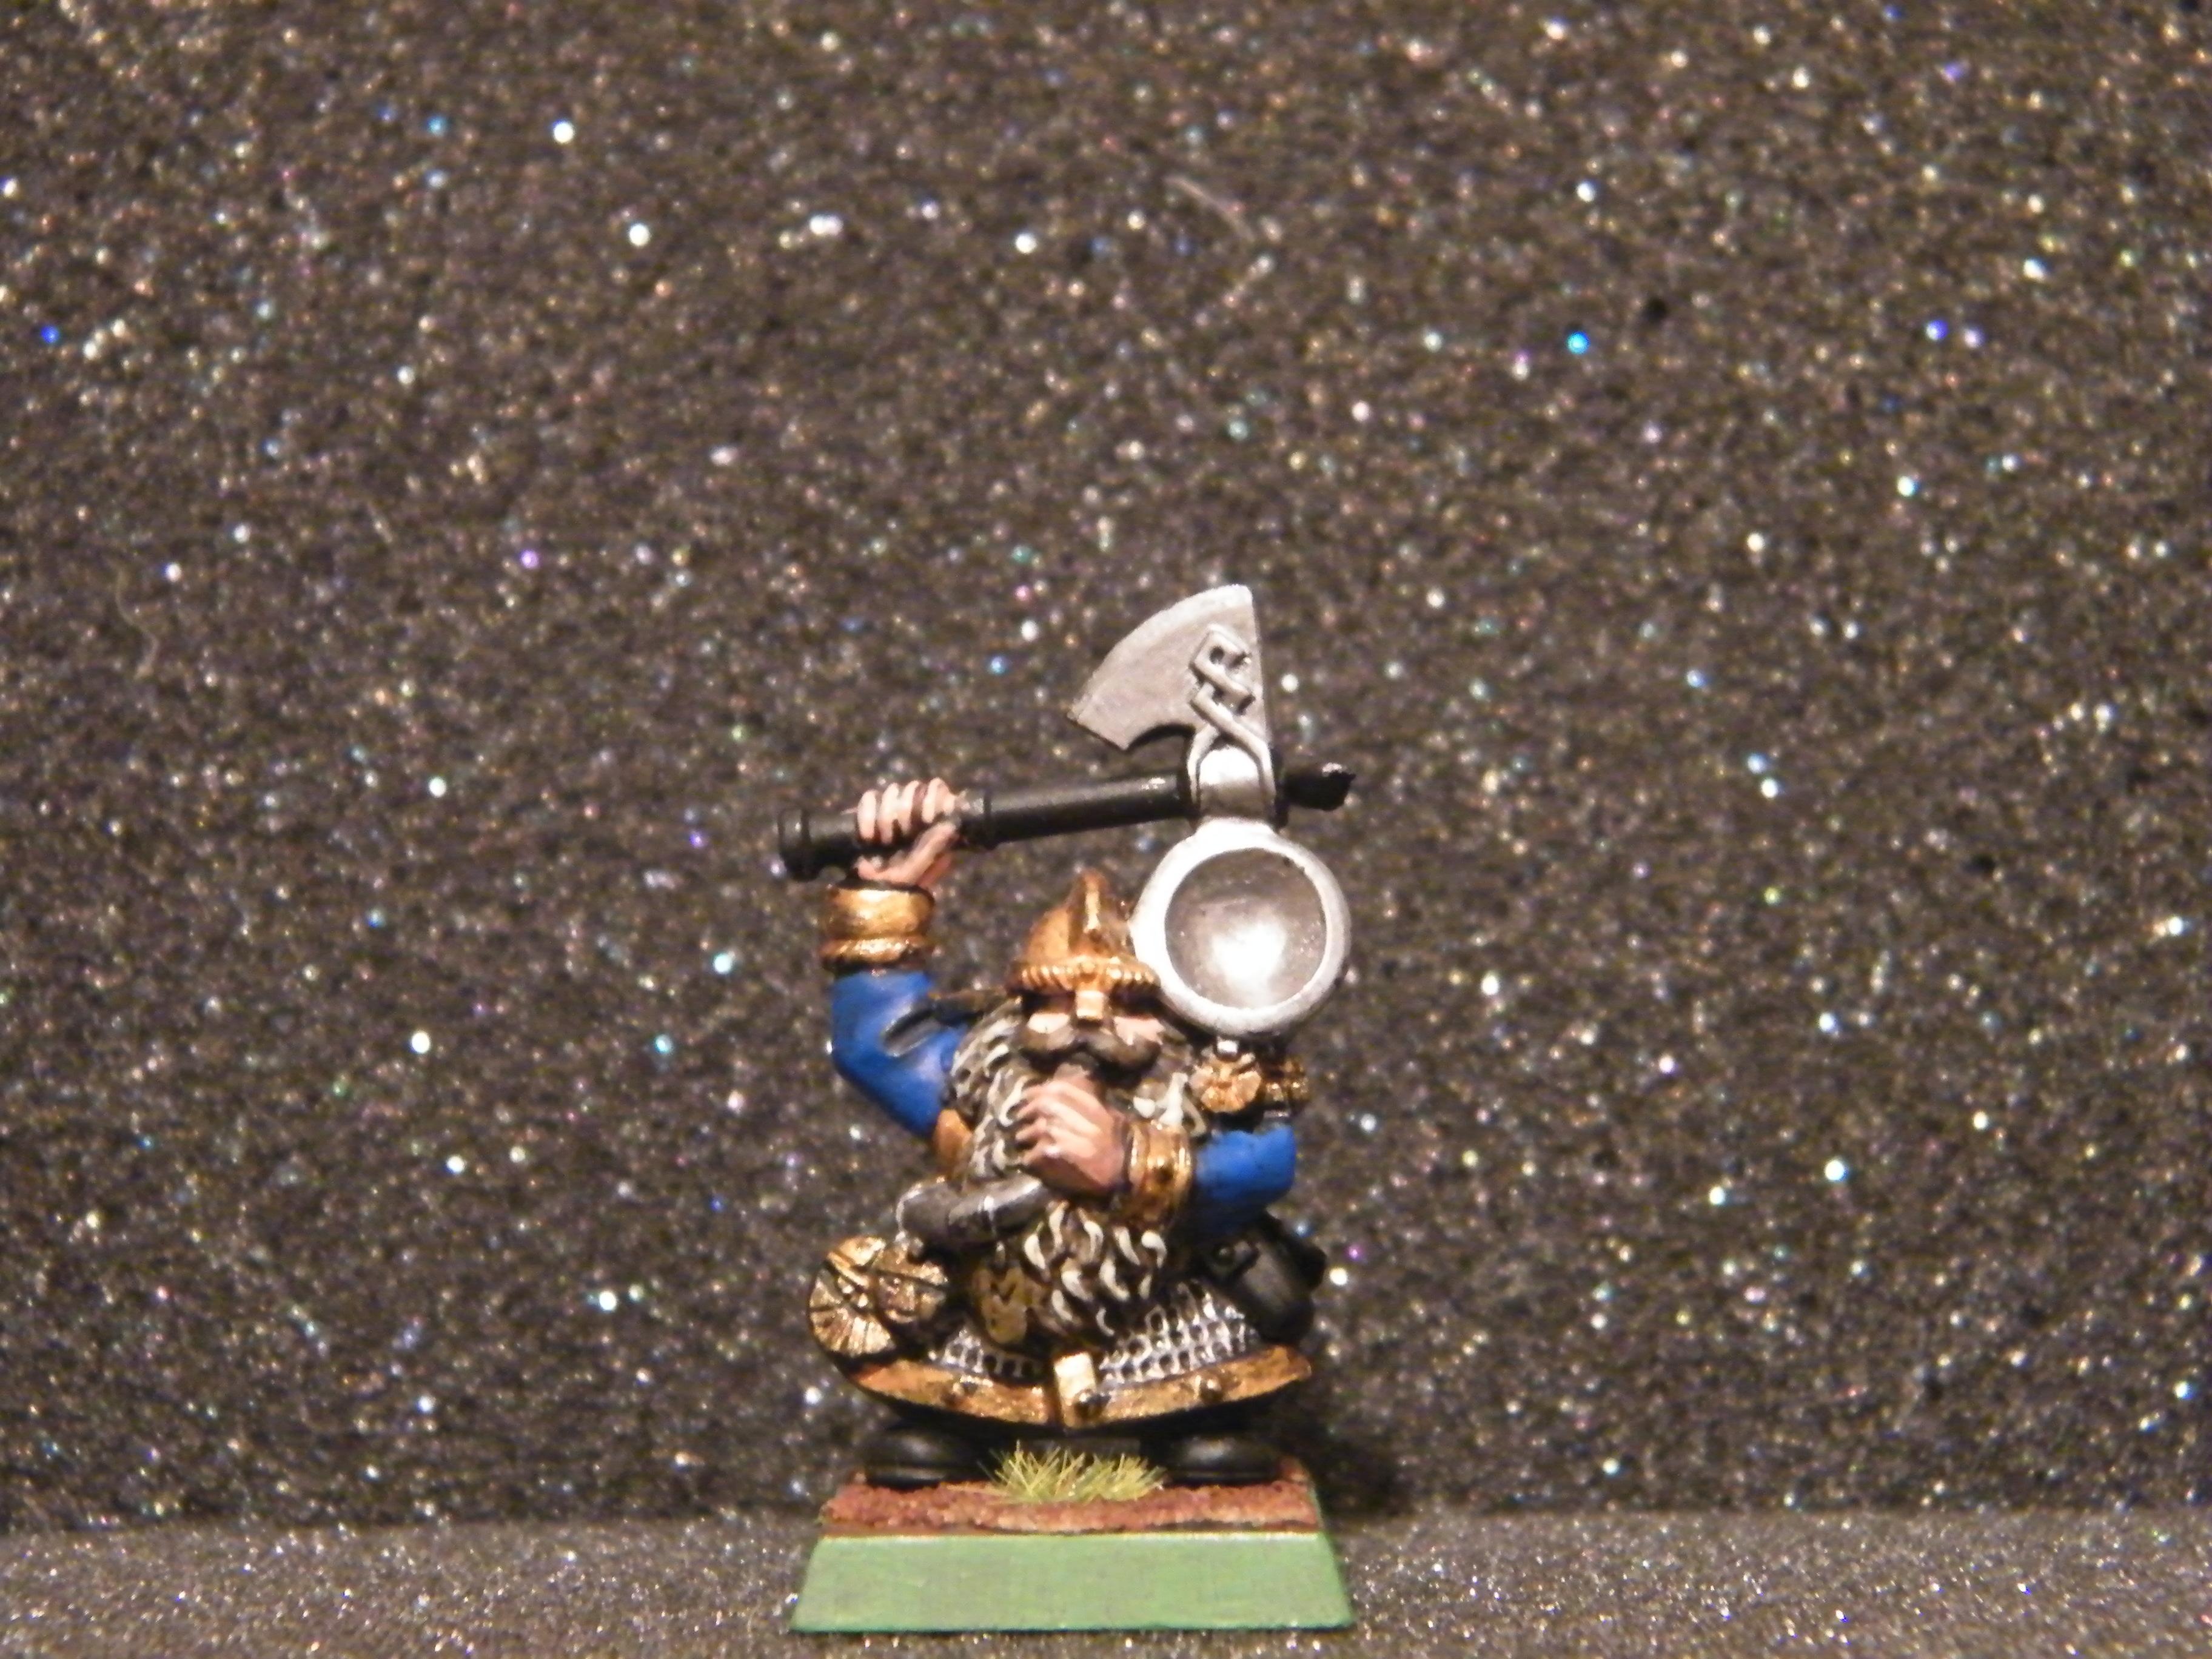 random Dwarf Musician! =)